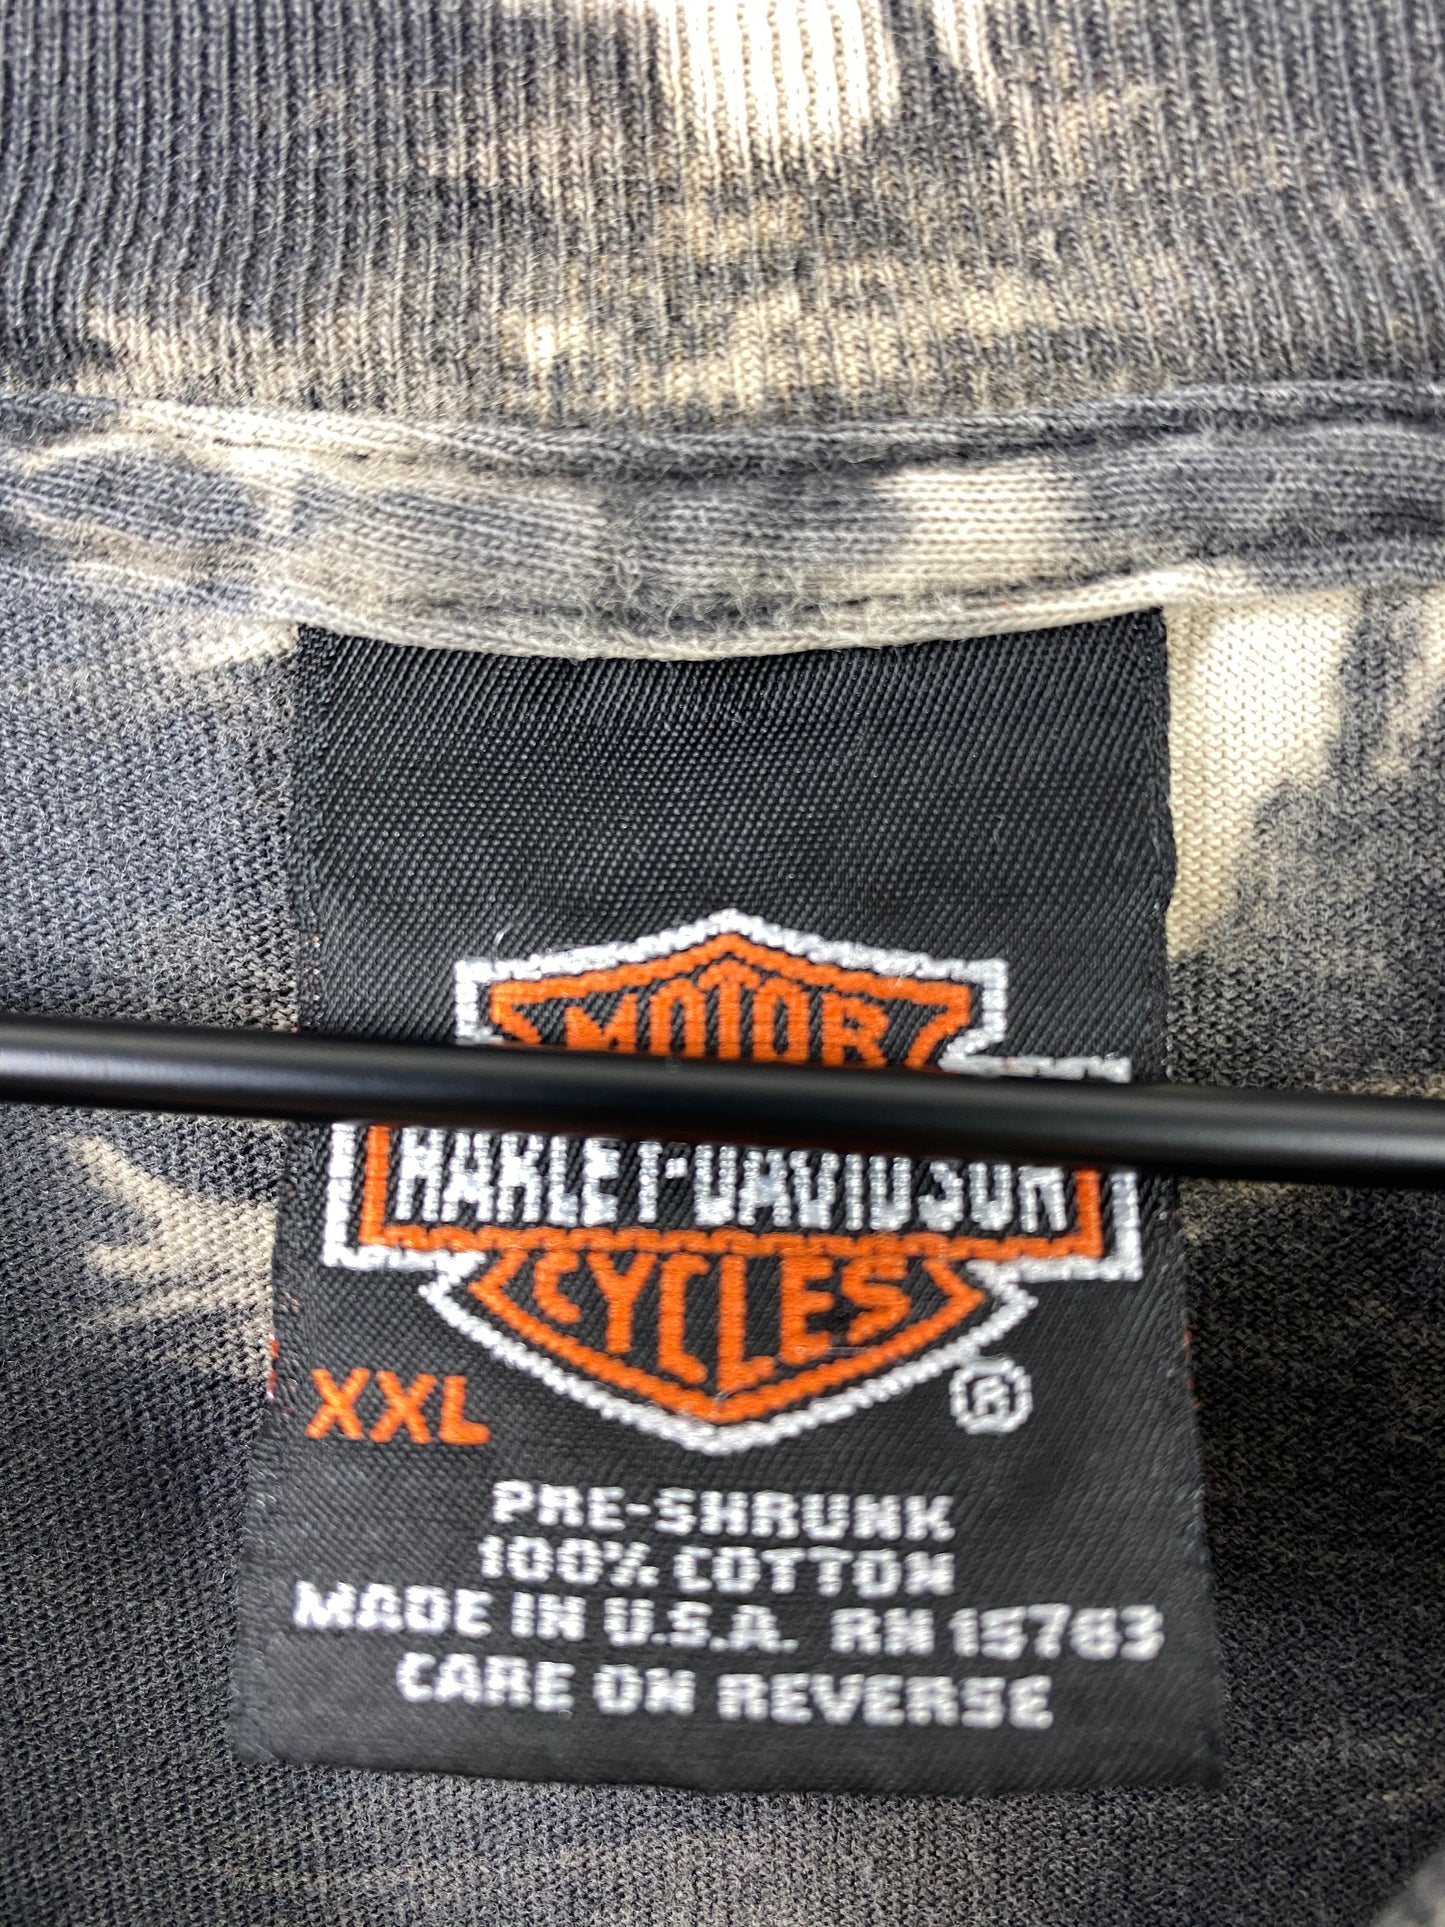 Harley Davidson T Shirt - XXL